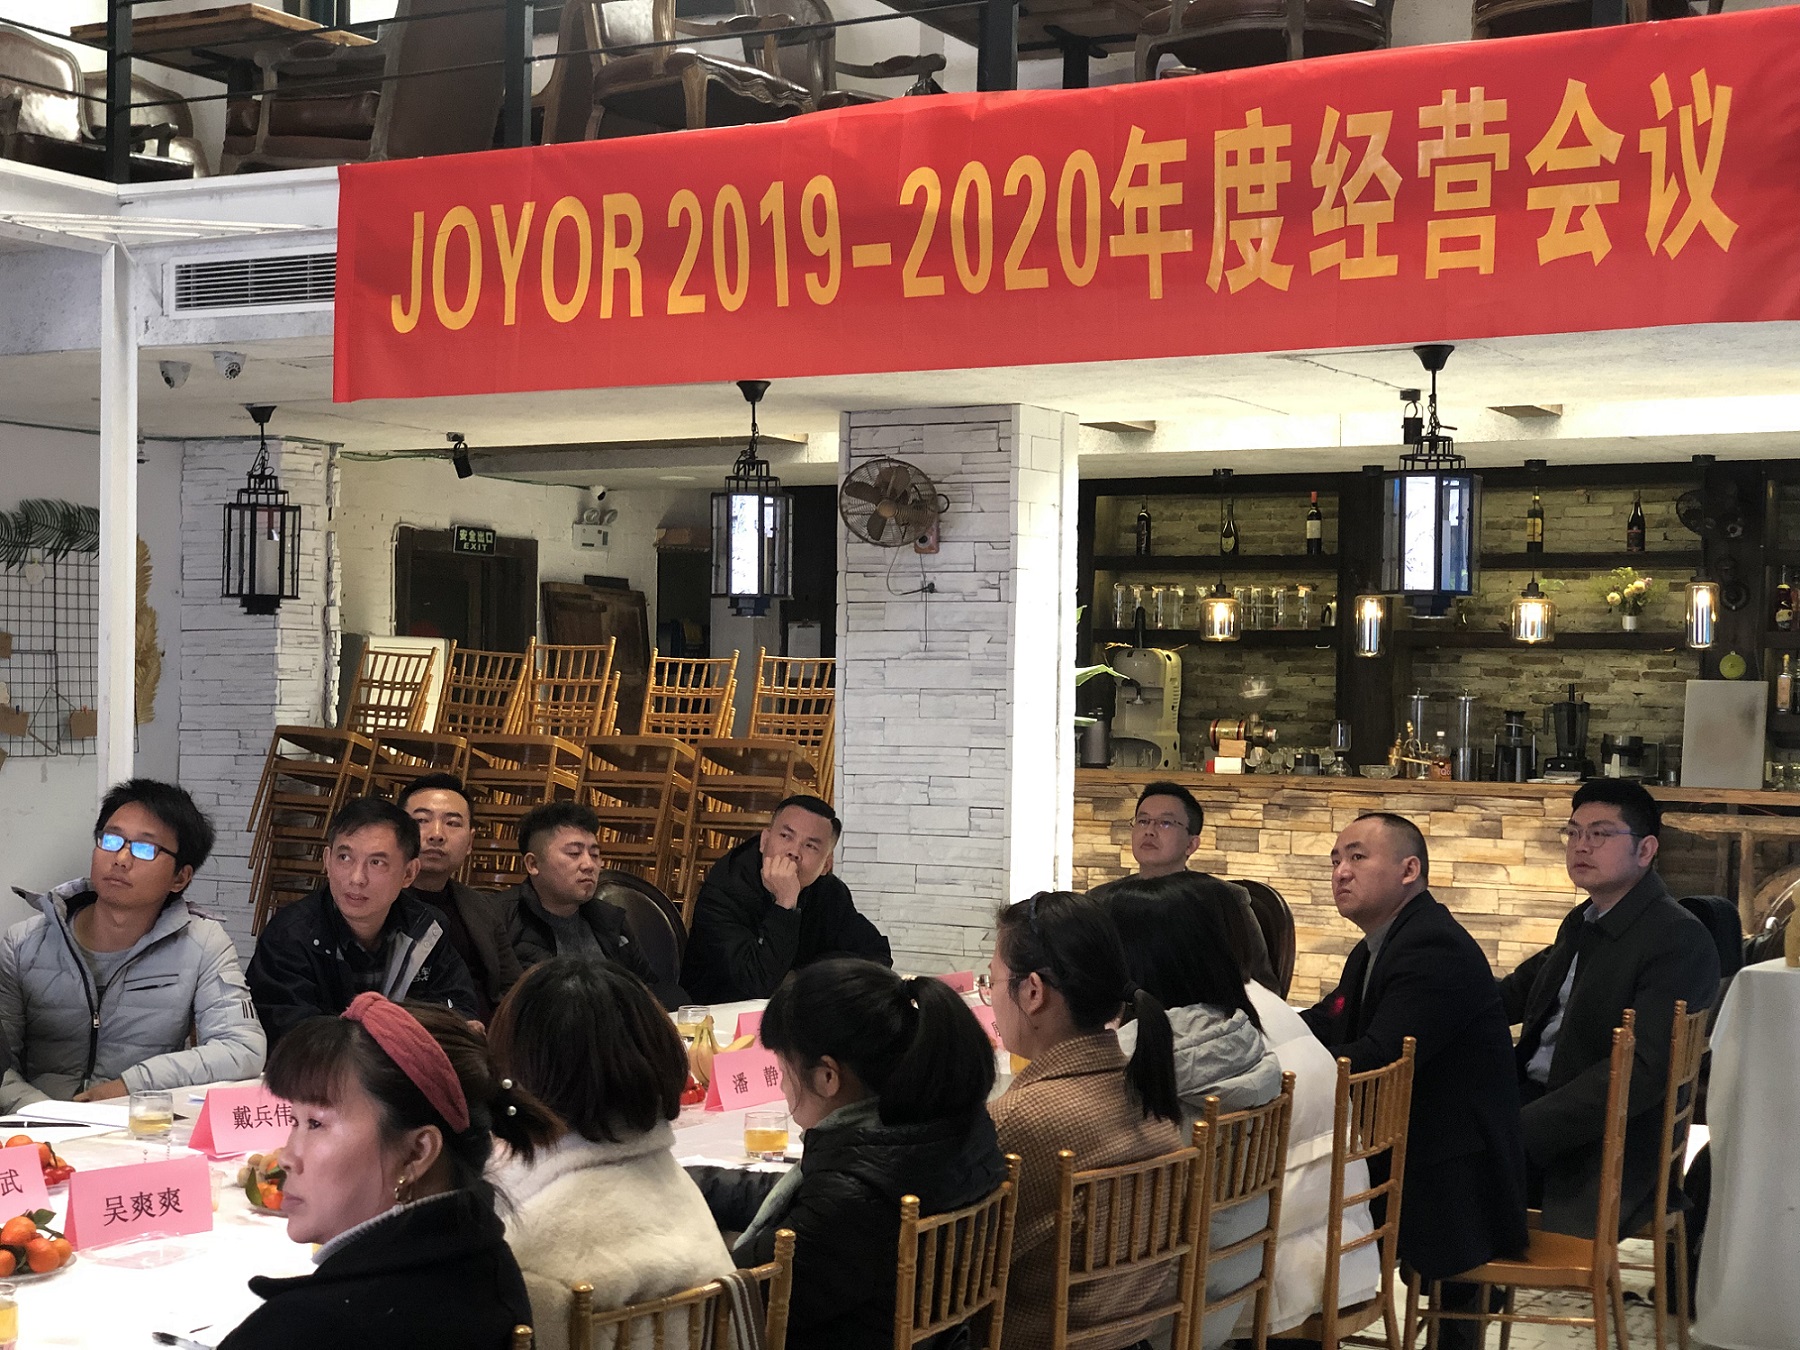 The 2019 annual summary meeting of Joyor was held successfully